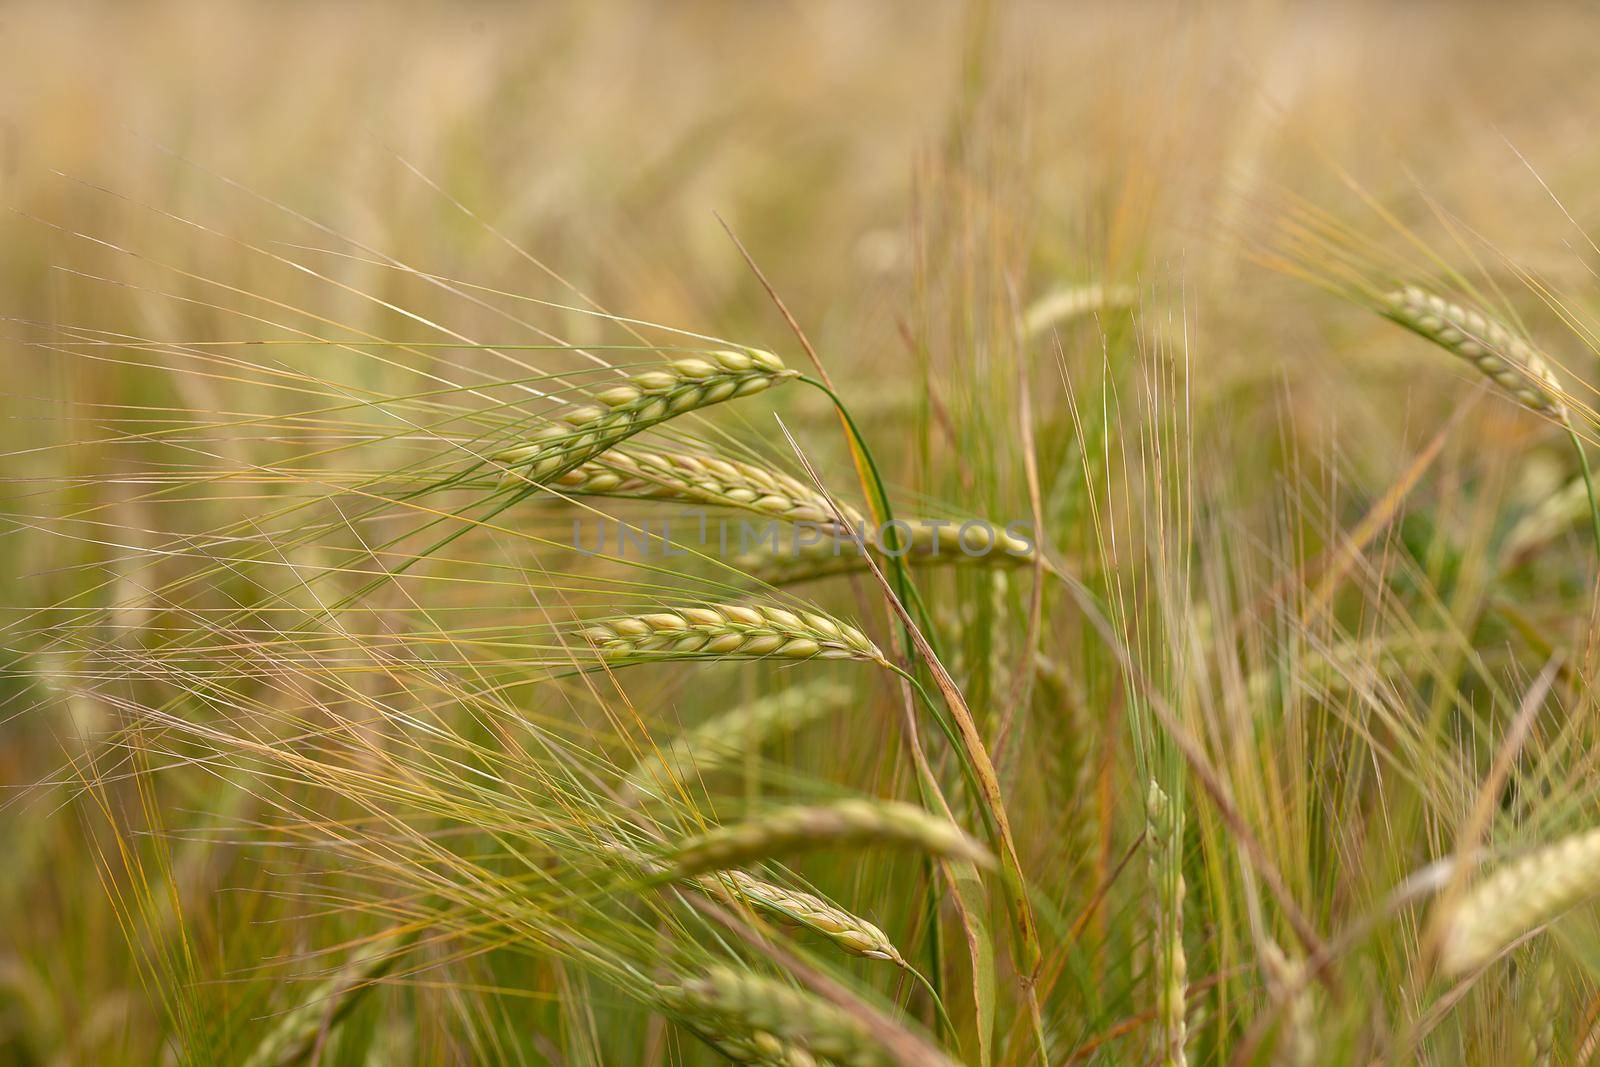 Field of barley by Angorius